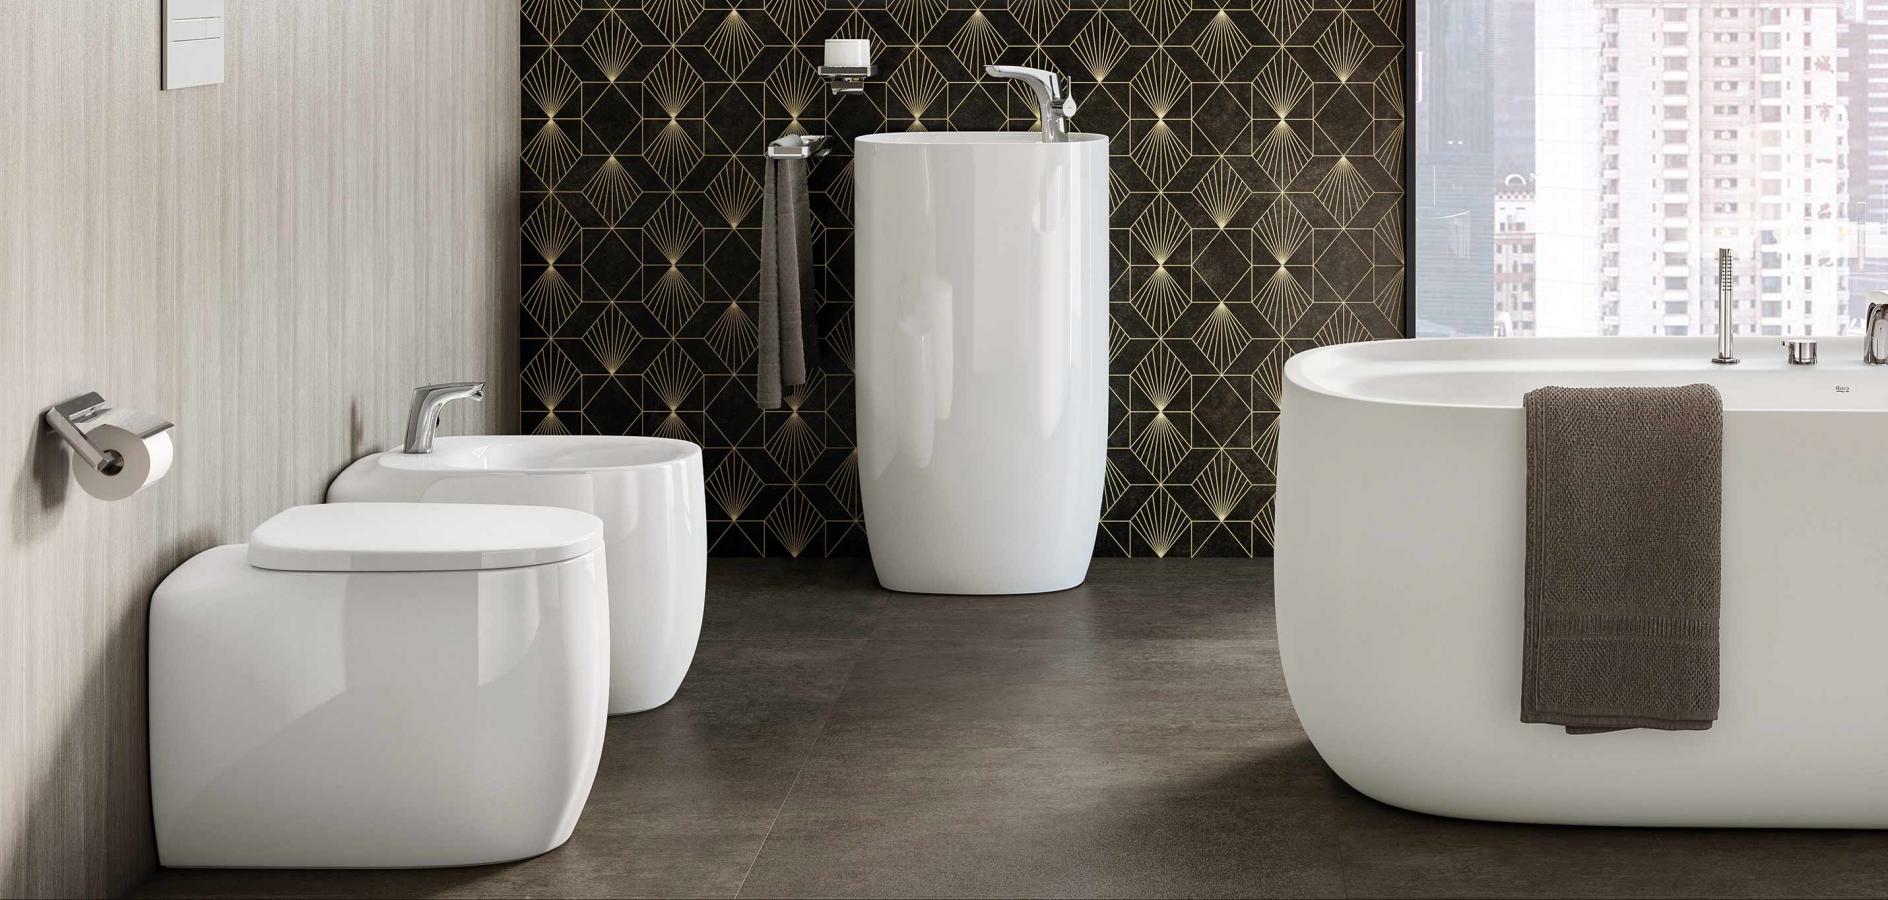 Modest pictures of modern bathrooms design Beyond Modern And Innovative Bathroom Designs Roca Life